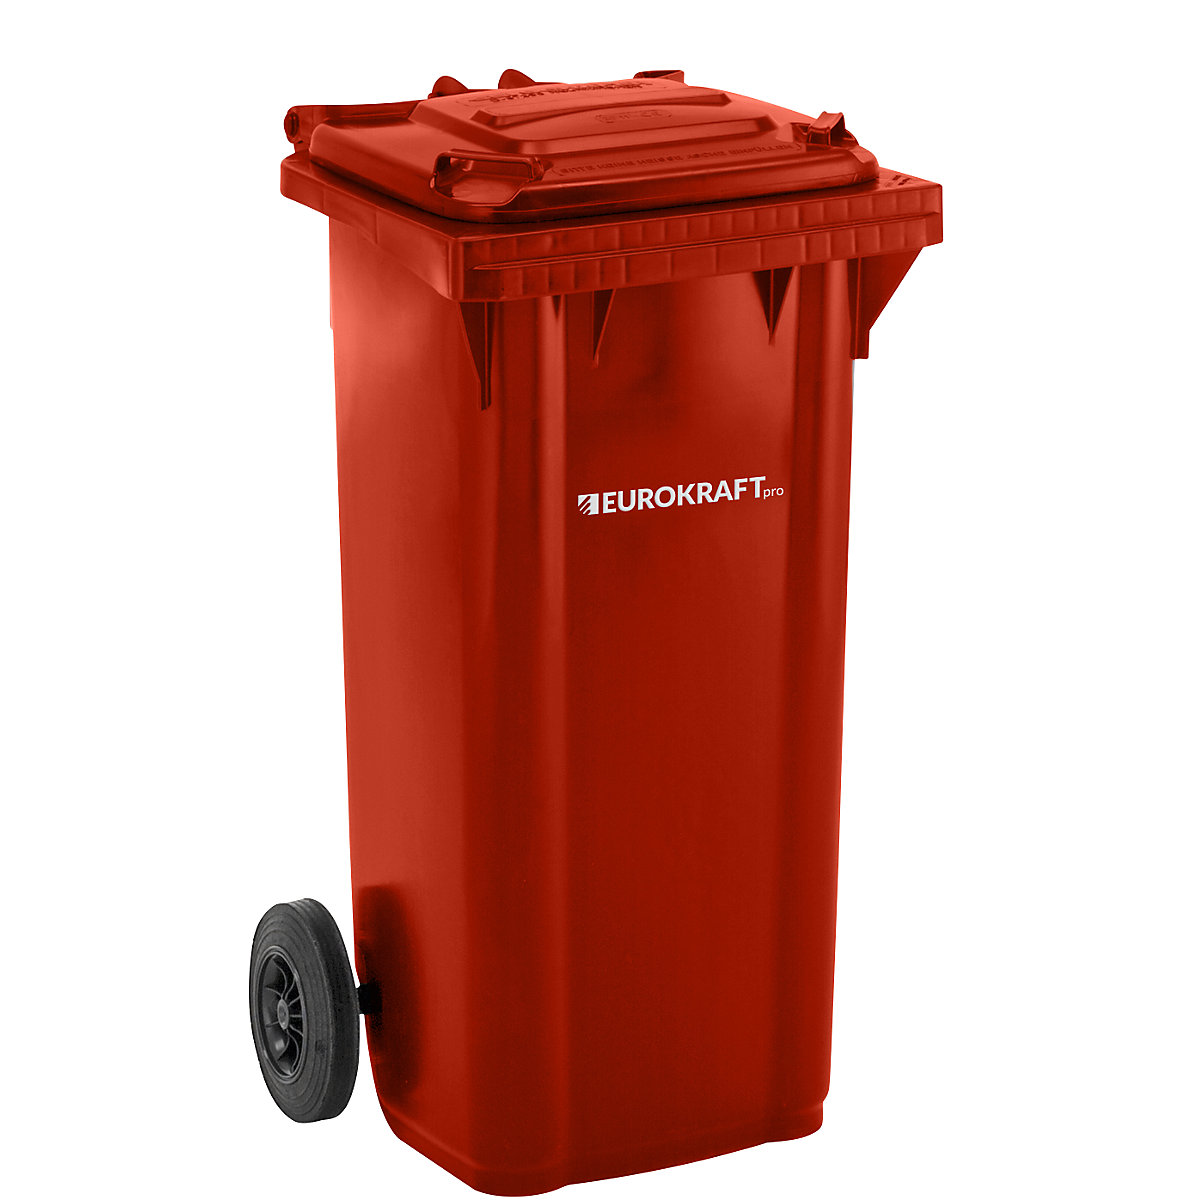 Contentor de lixo em plástico DIN EN 840 – eurokraft pro